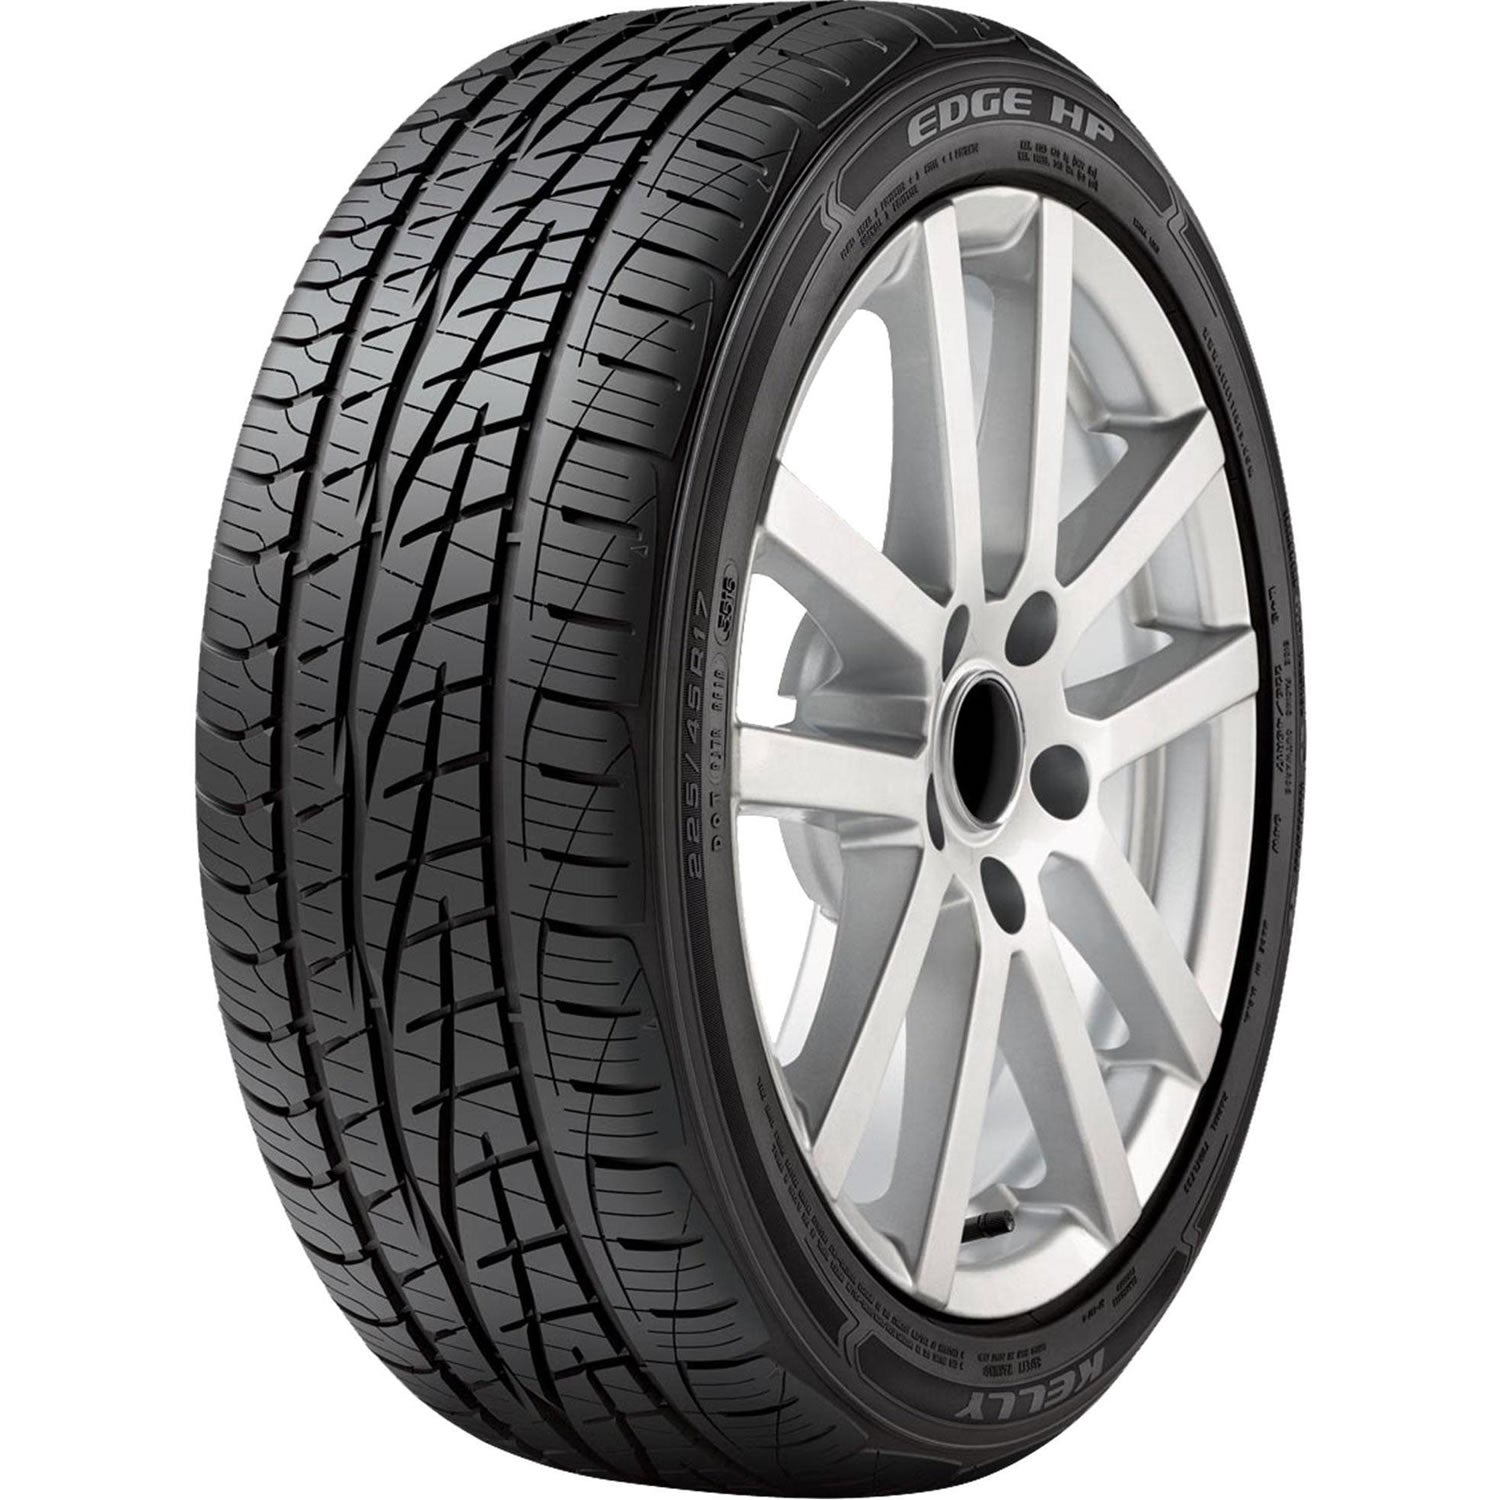 KELLY EDGE HP 195/55R15 (23.4X7.9R 15) Tires